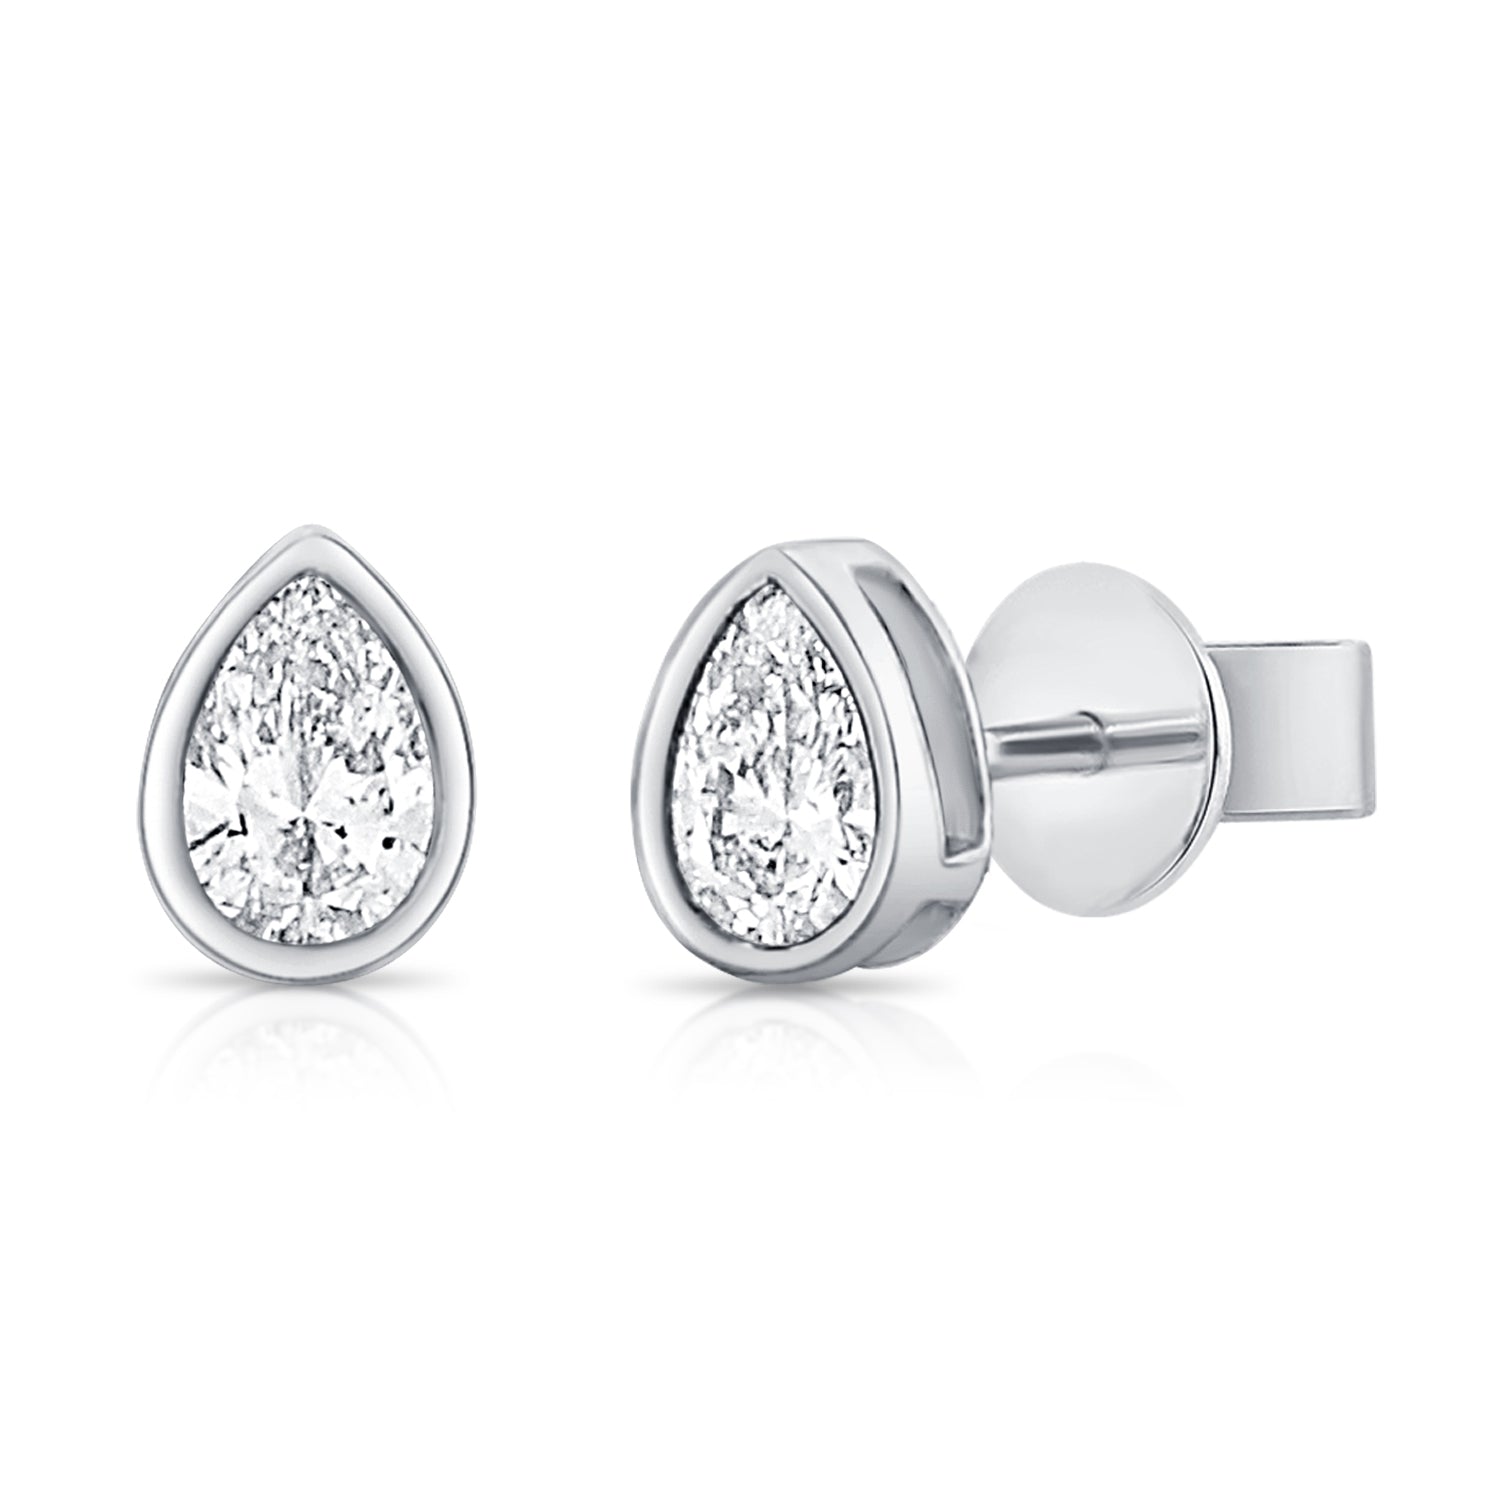 14K Gold & Pear-Shaped Diamond Stud Earrings - 0.30ct